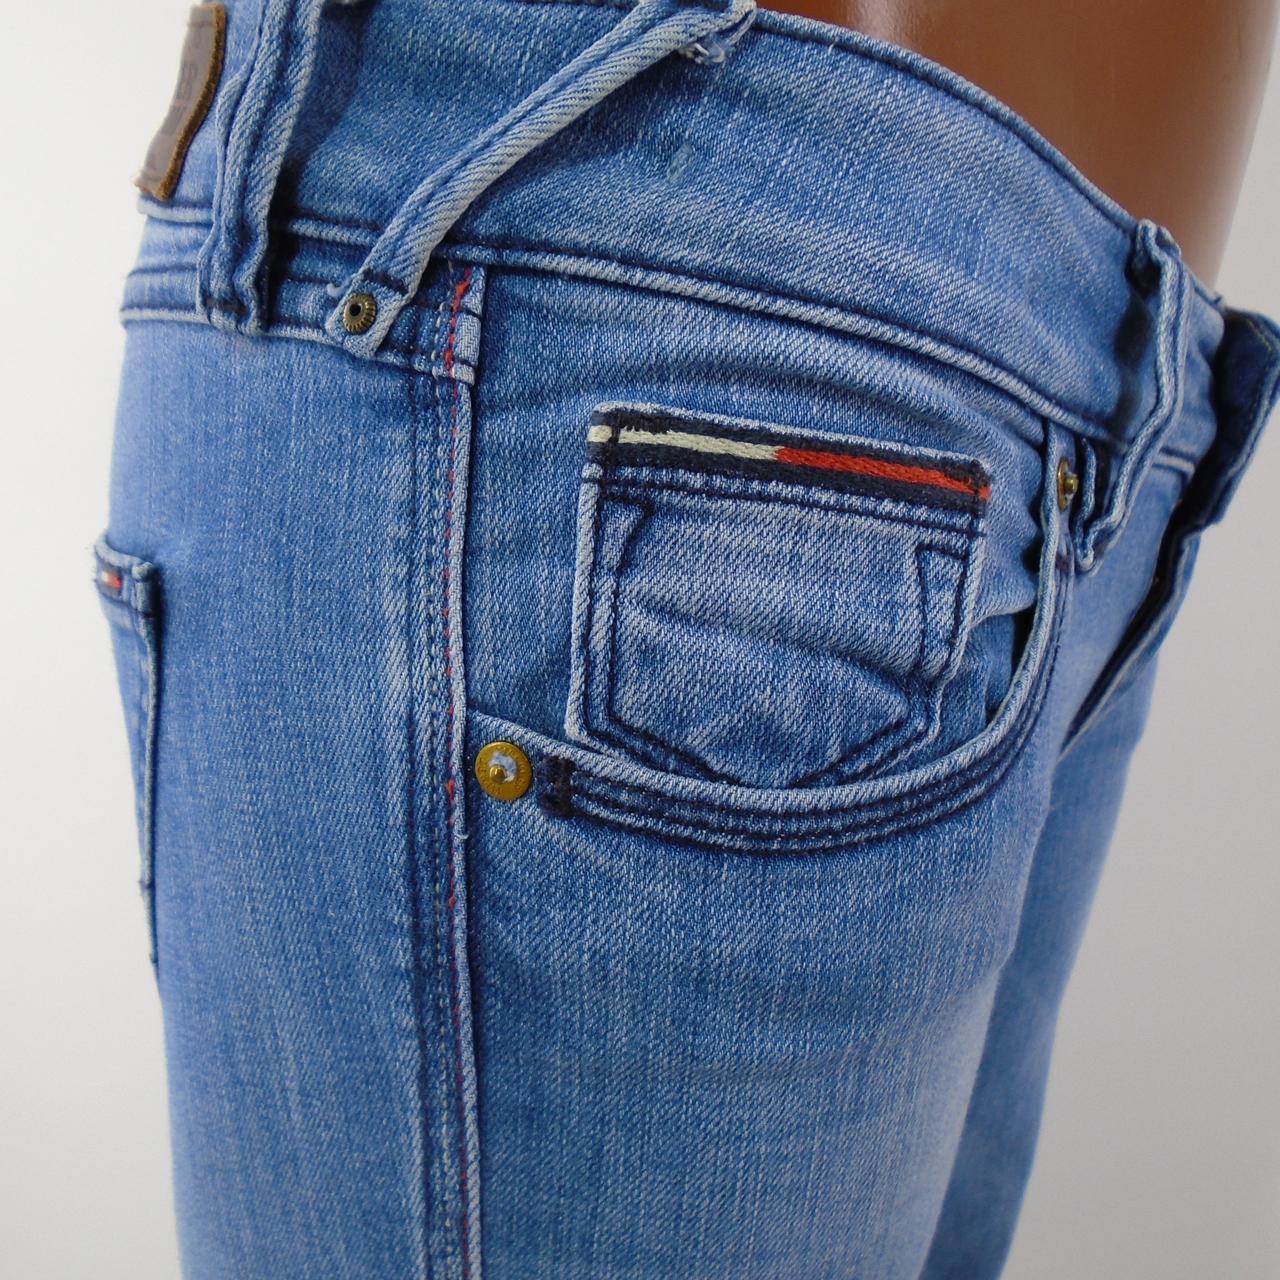 Jeans da donna Tommy Hilfiger.  Blu.  XS.  Usato.  Bene